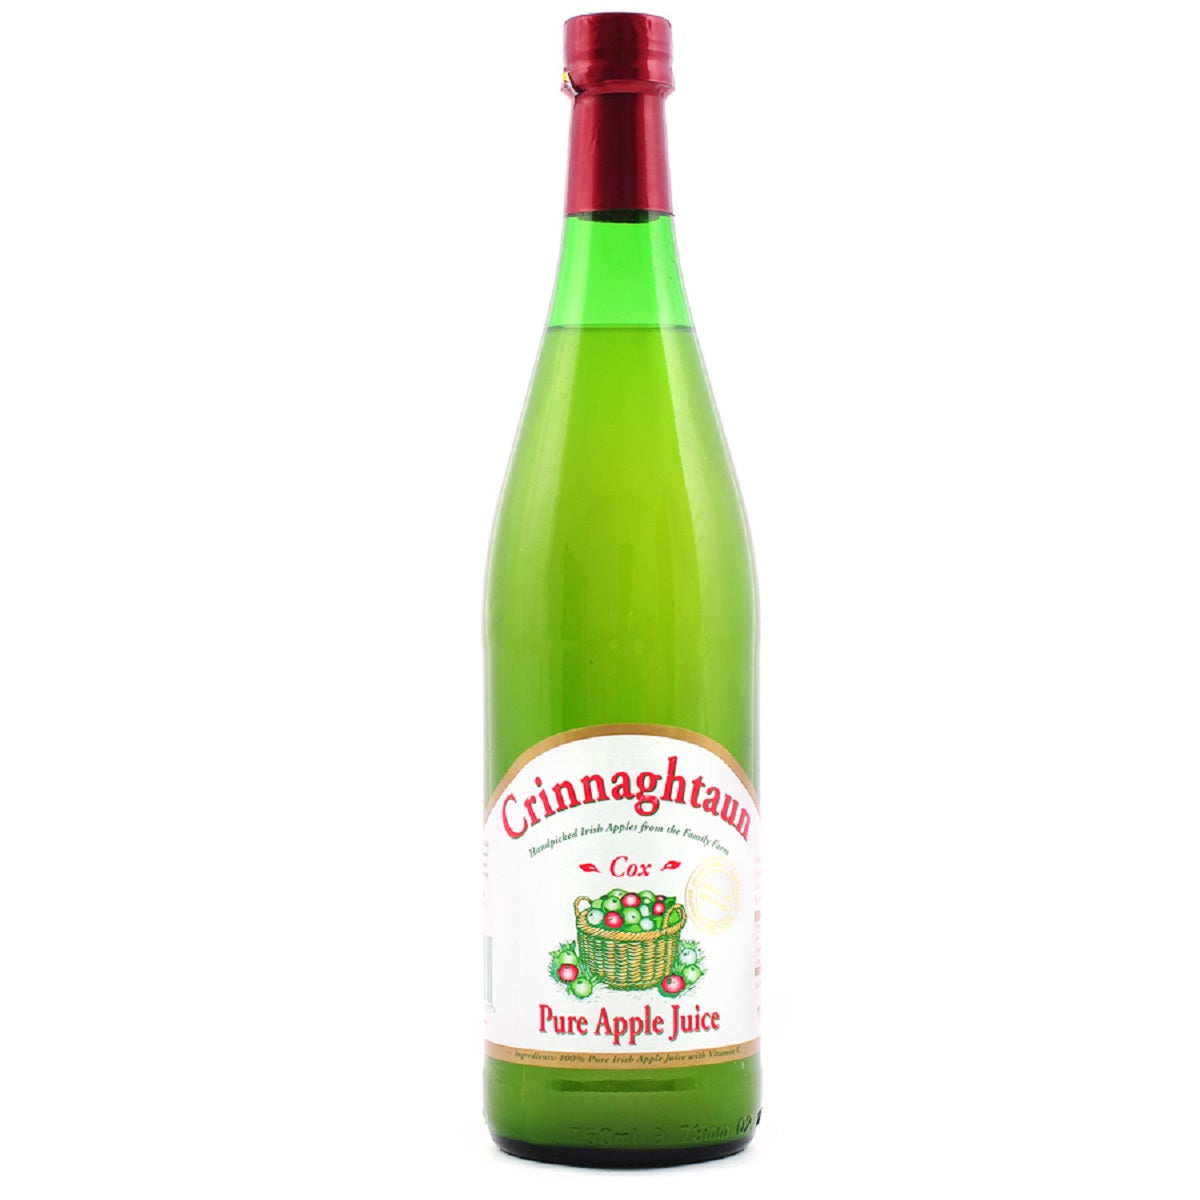 Crinnaghtaun Cox Pure Apple Juice 750ml